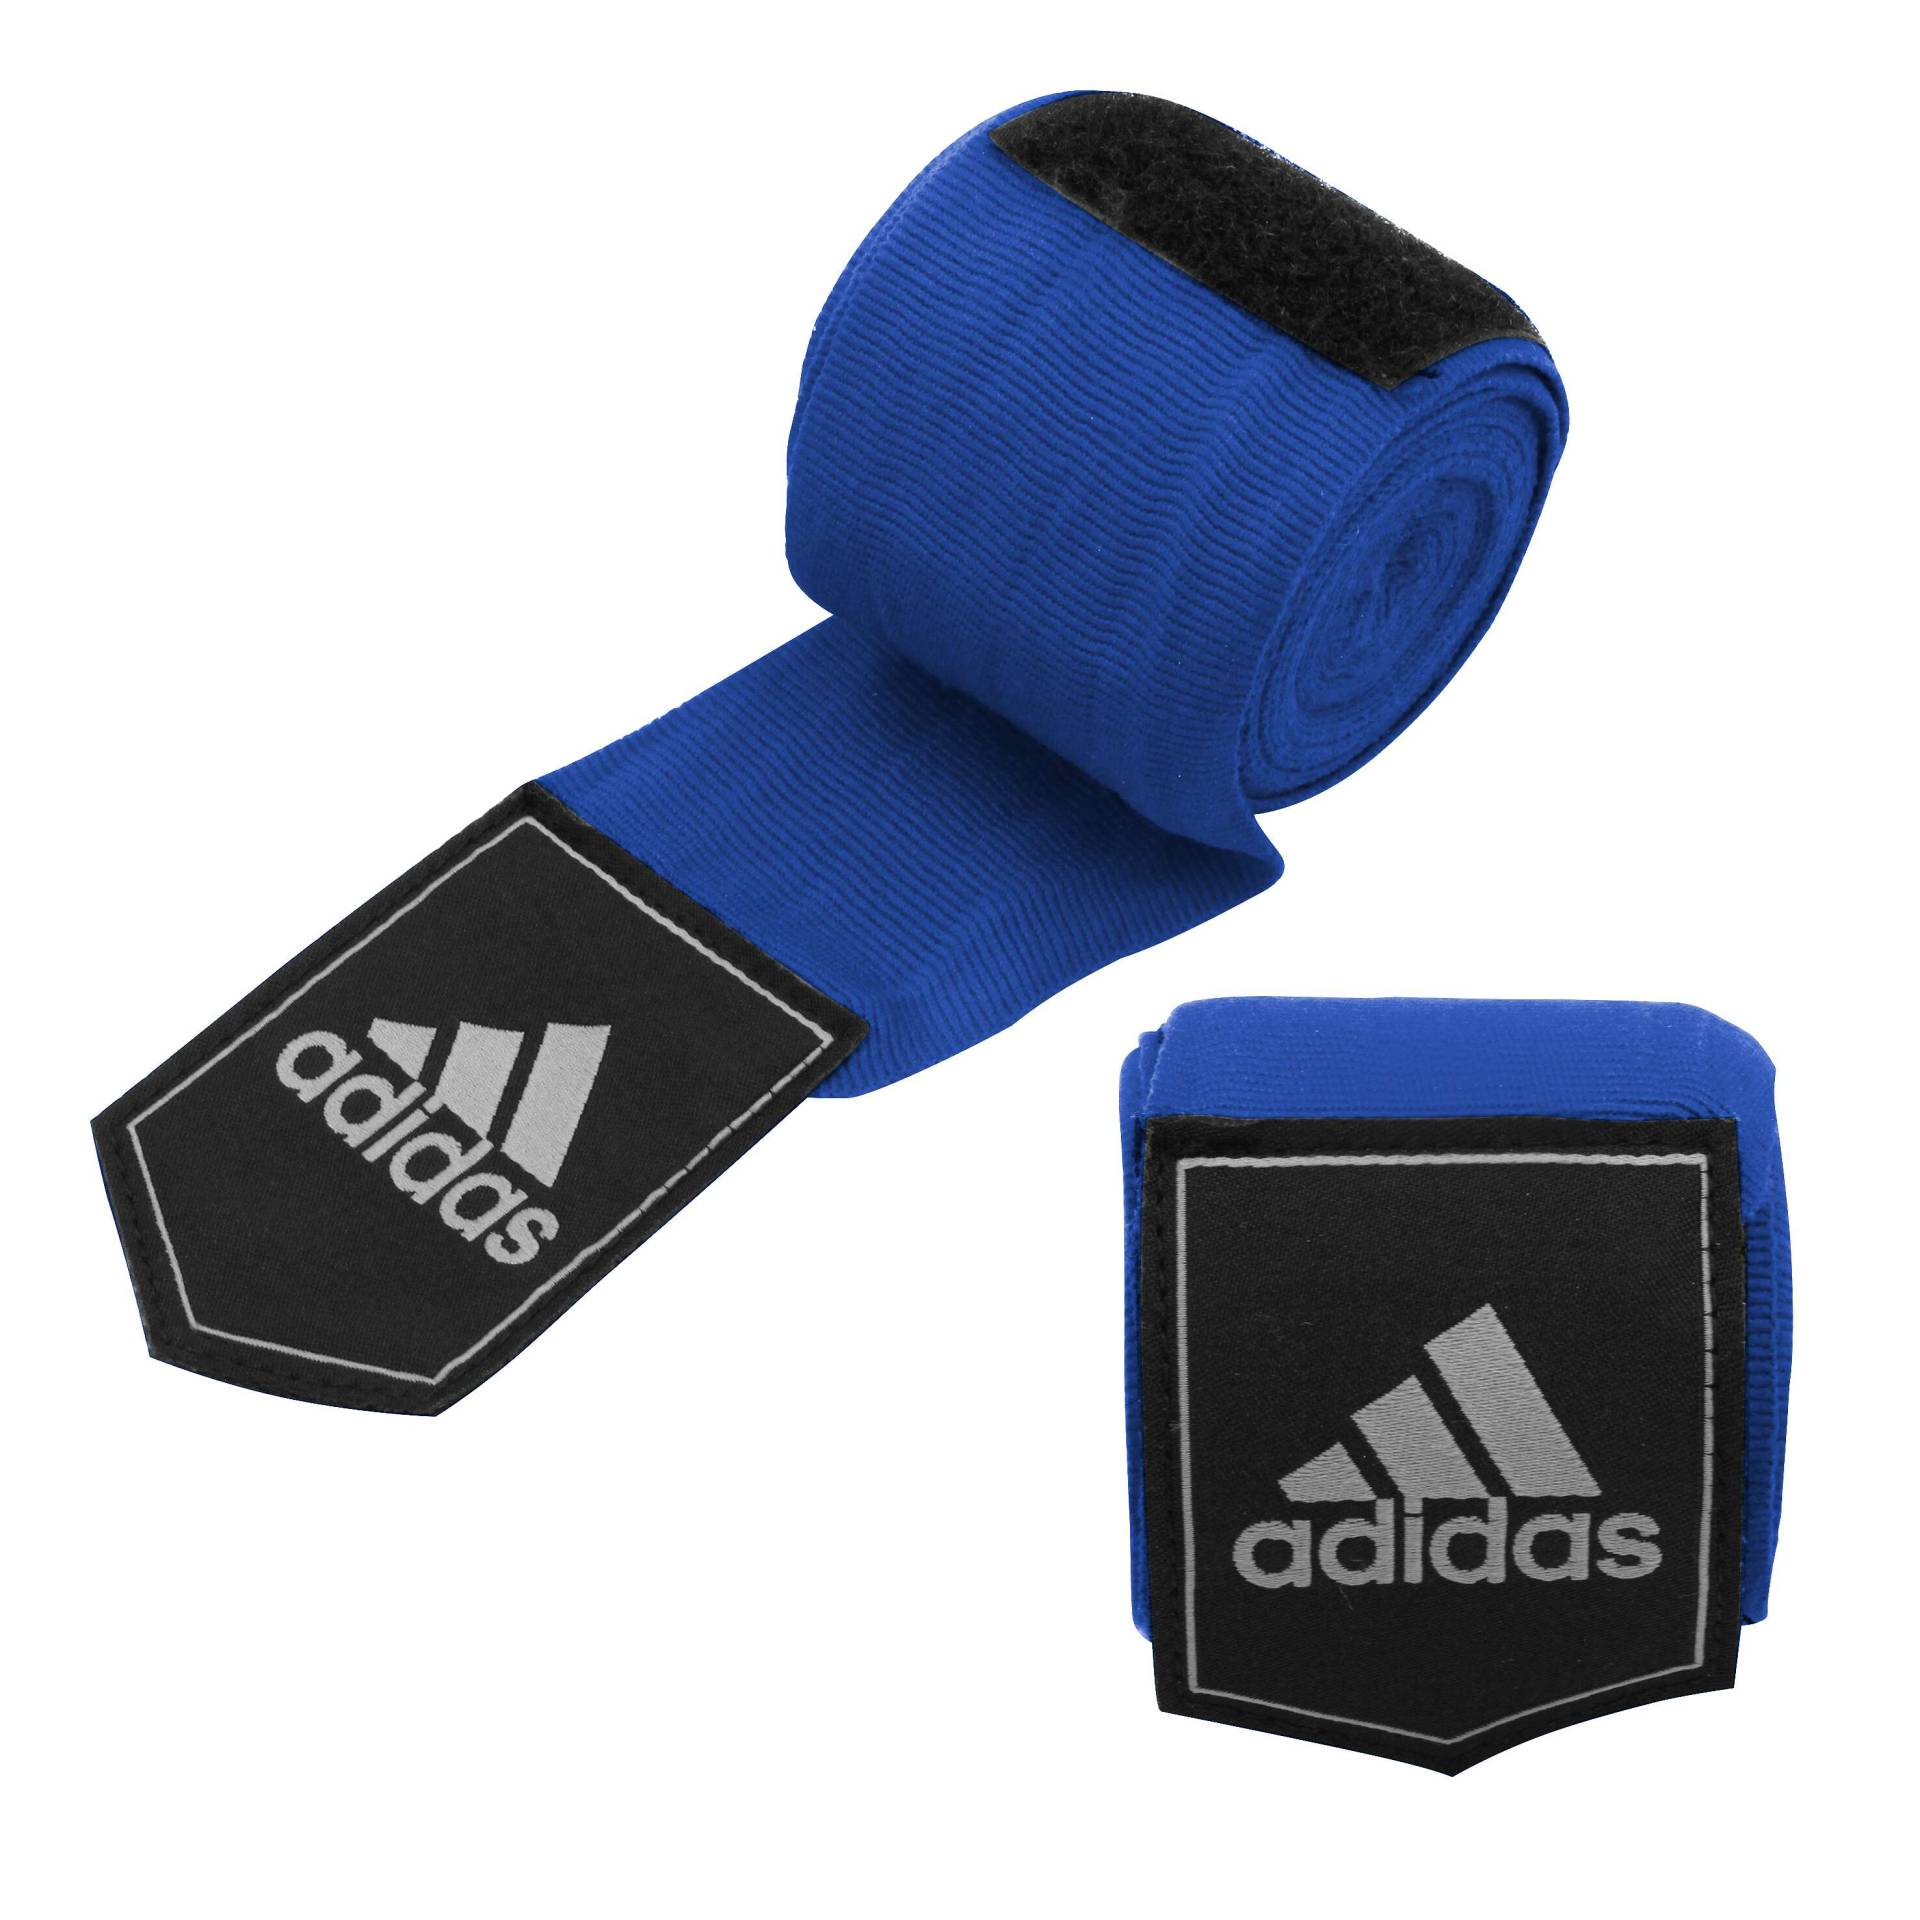 Adidas Boxbandagen, Blau von Adidas